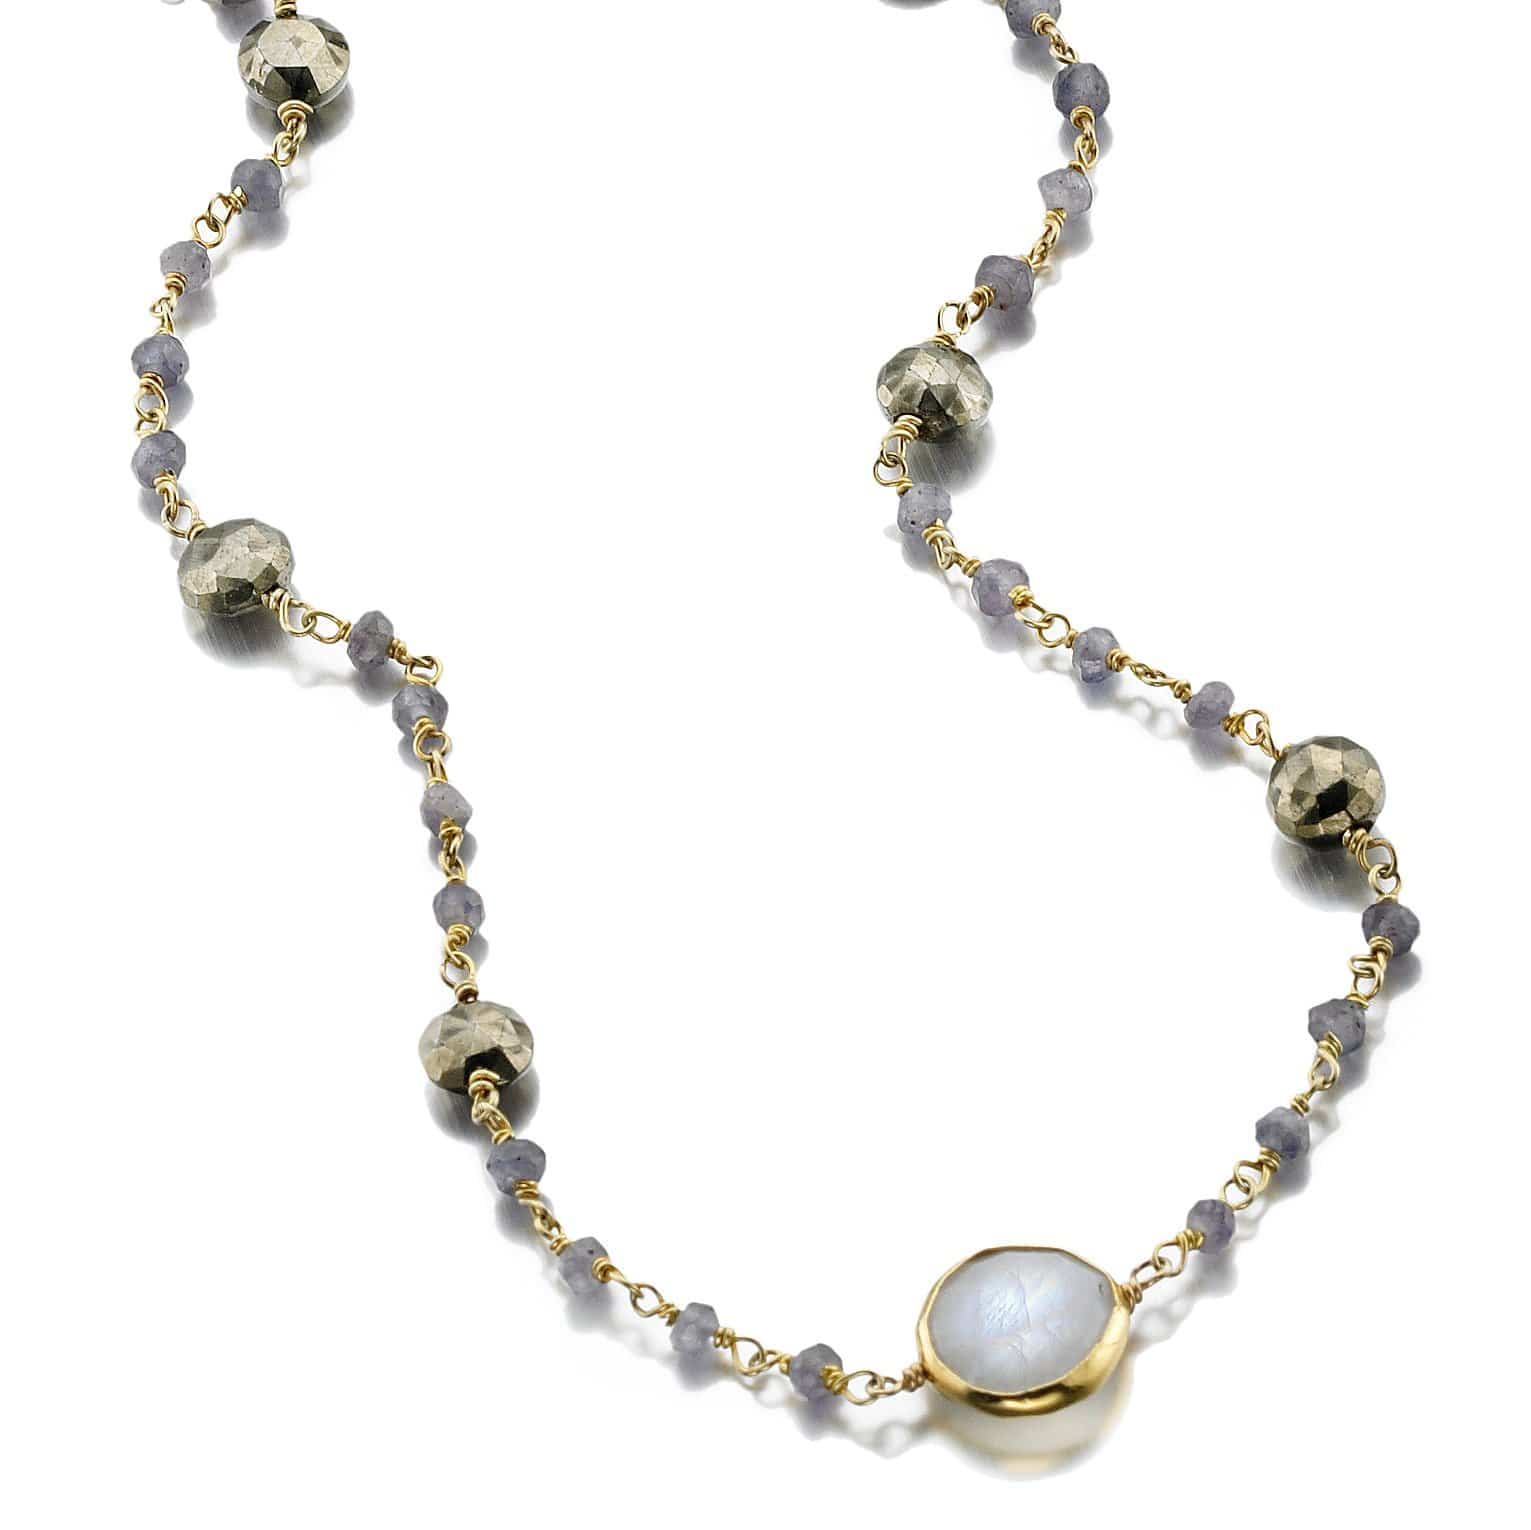 ELA Rae | Libi Choker Necklace | Women’s Designer Fashion Jewelry 14K Yellow Gold Plate / Hematite / Labradorite